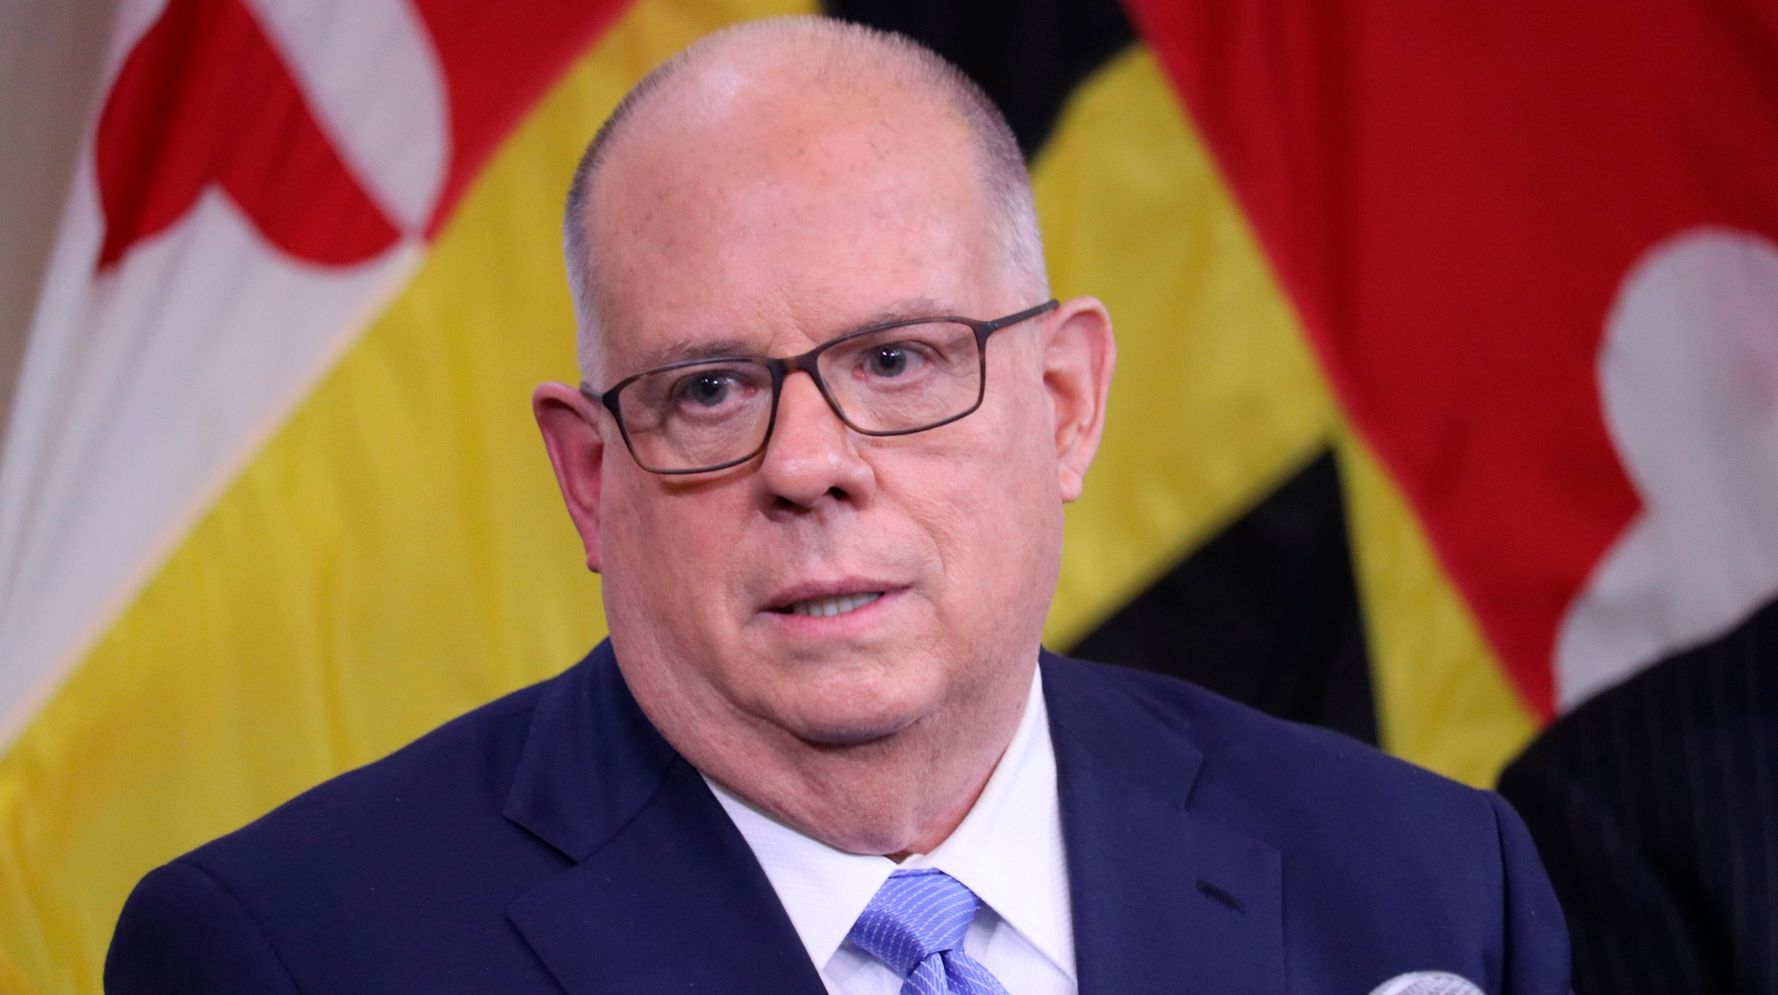 GOP Primary Winners Like Maryland’s ‘QAnon Whack Job’ Will Hurt Party: Gov. Larry Hogan